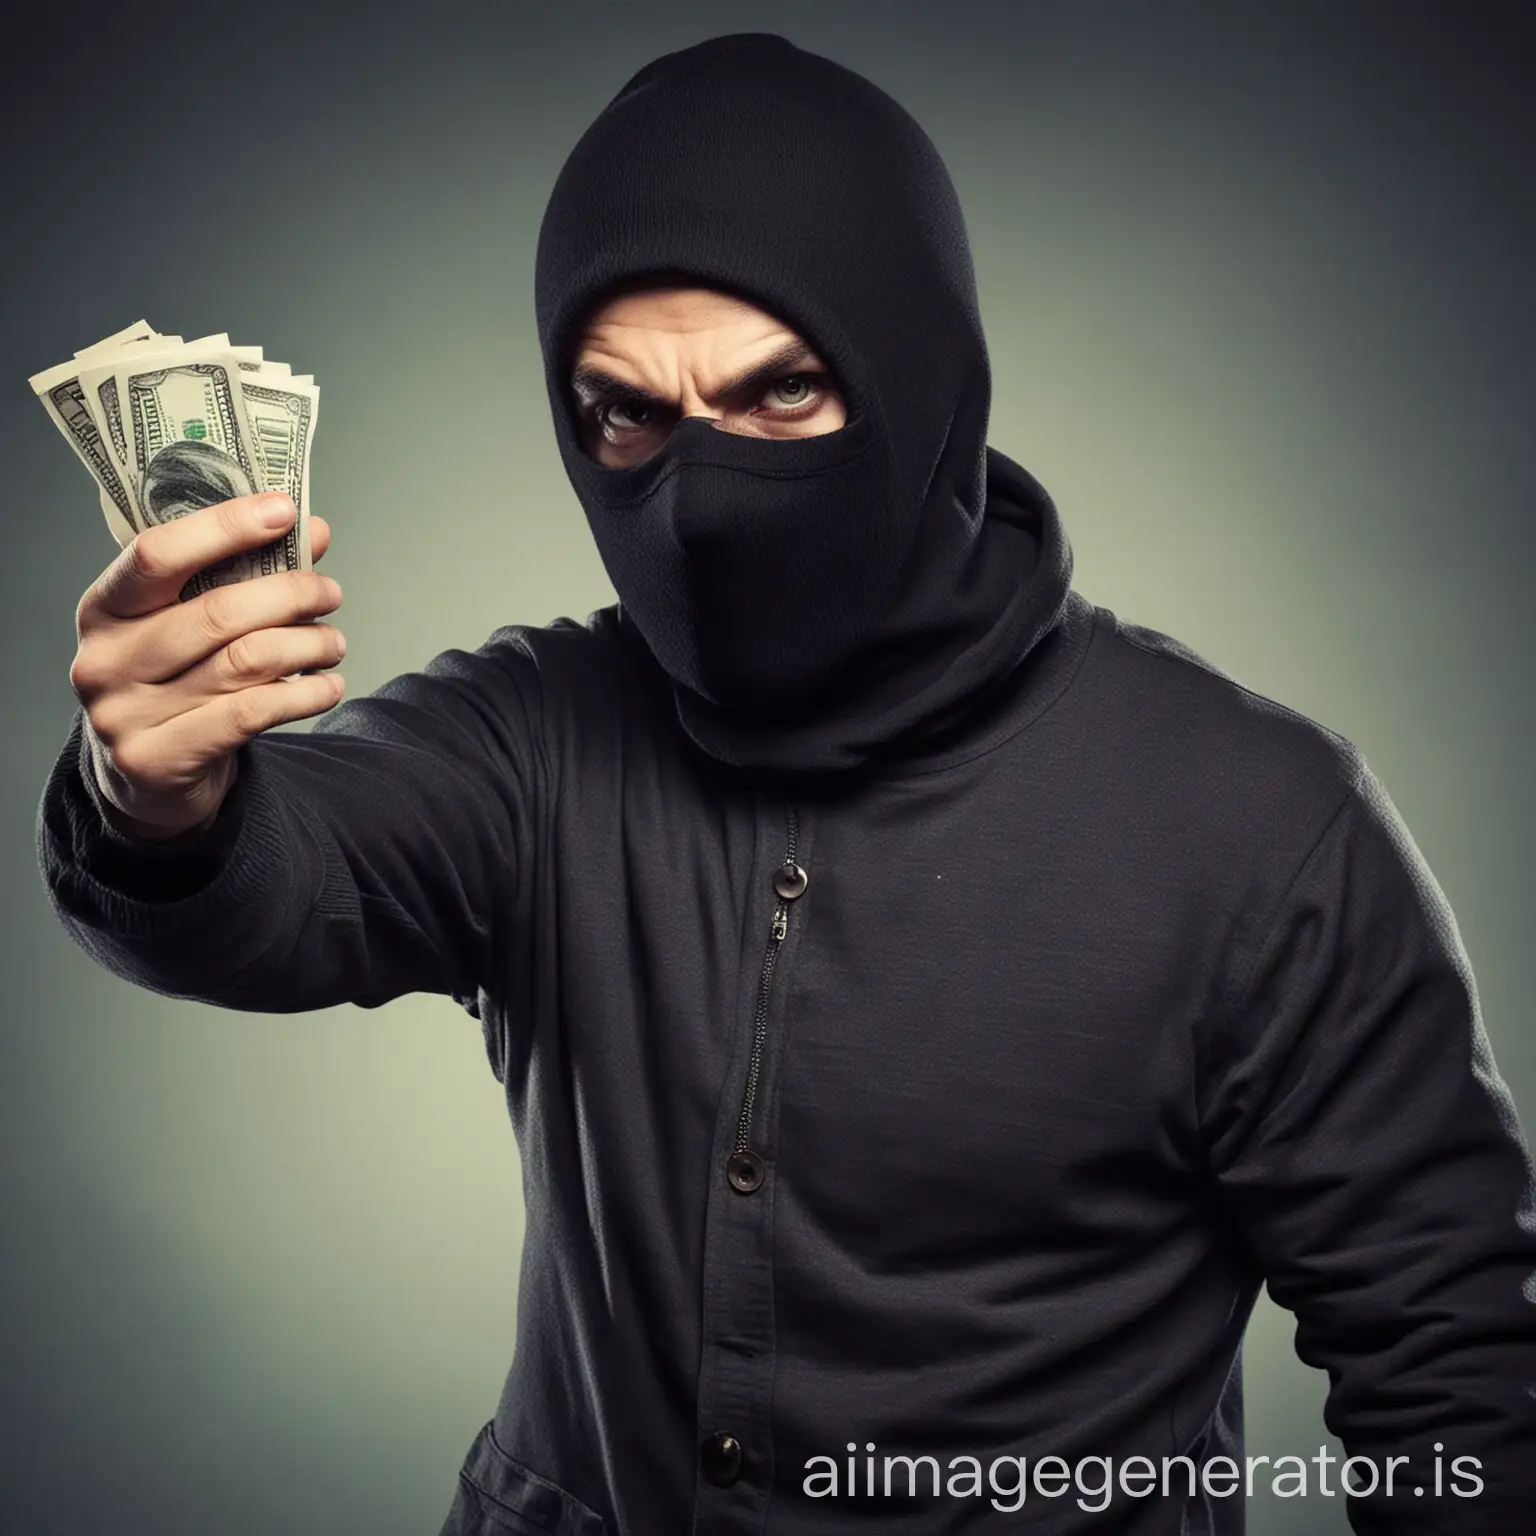 Armed-Robber-Demanding-Cash